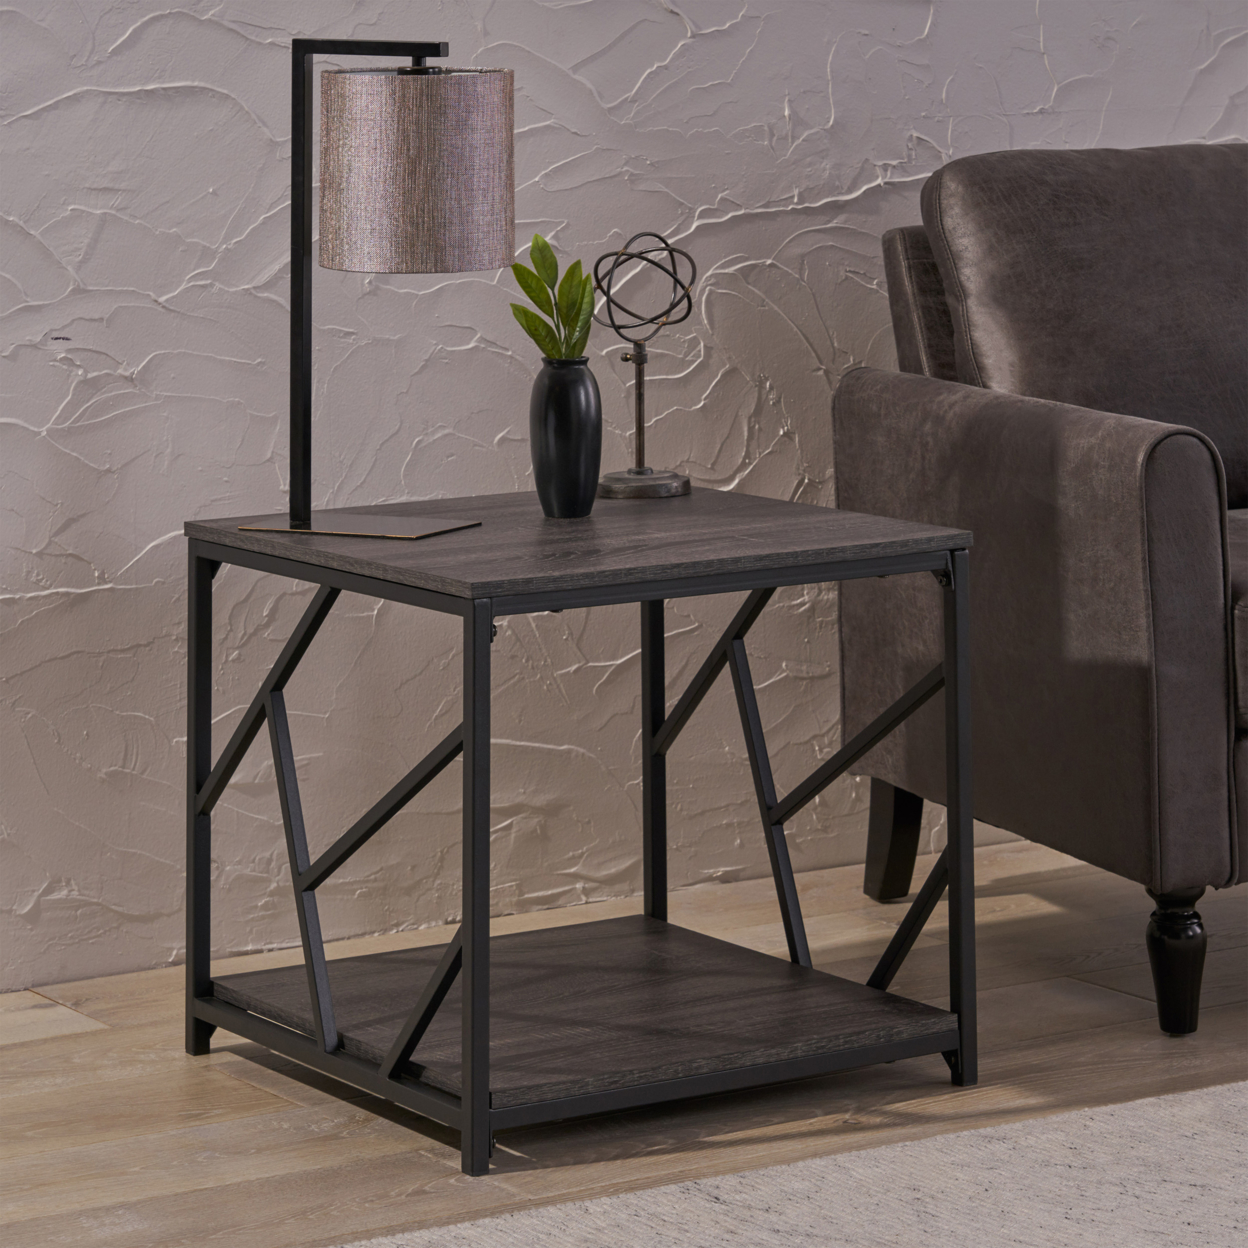 Belle Industrial Modern Iron Coffee Table - Dark Gray Finish + Black Finish